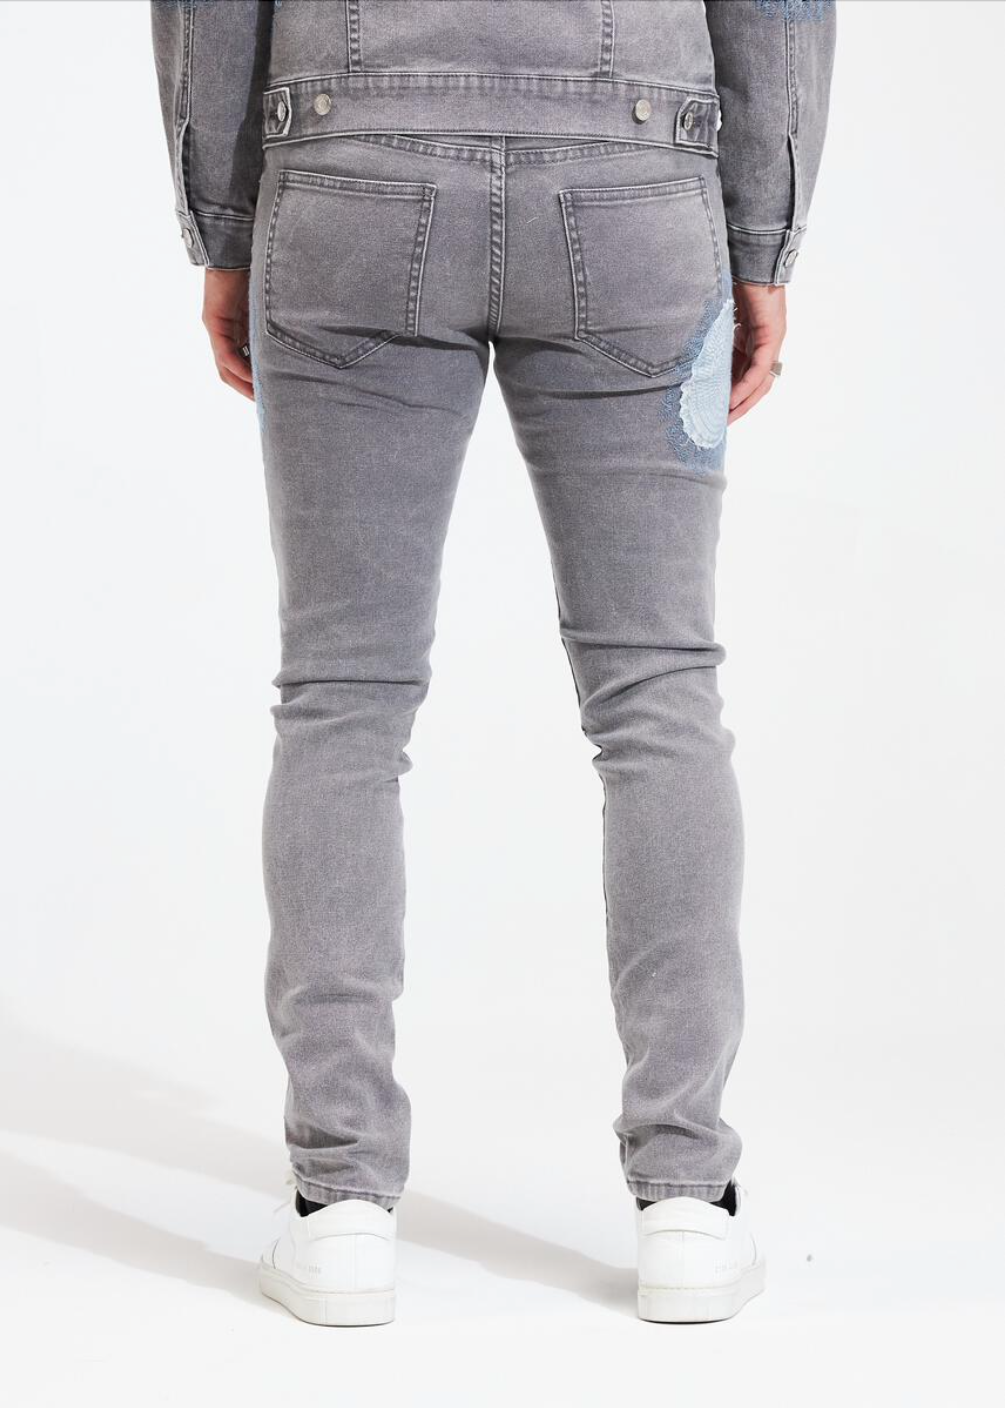 Embellish NYC Jeans | crispmen.